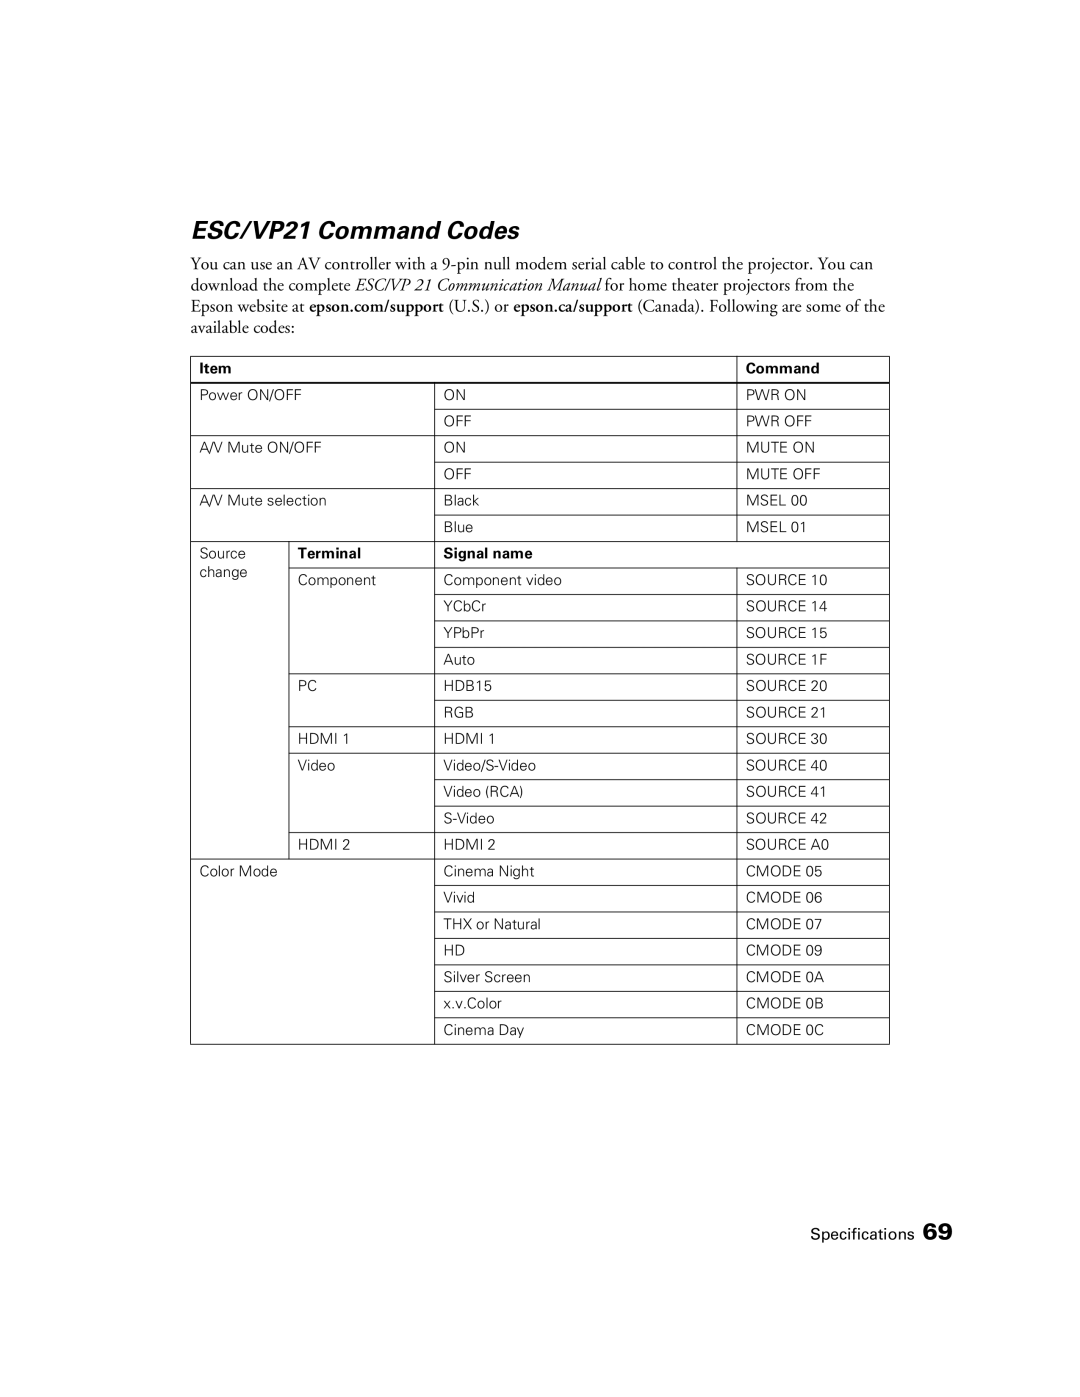 Epson 9700, 9350 manual ESC/VP21 Command Codes, Terminal, Signal name 